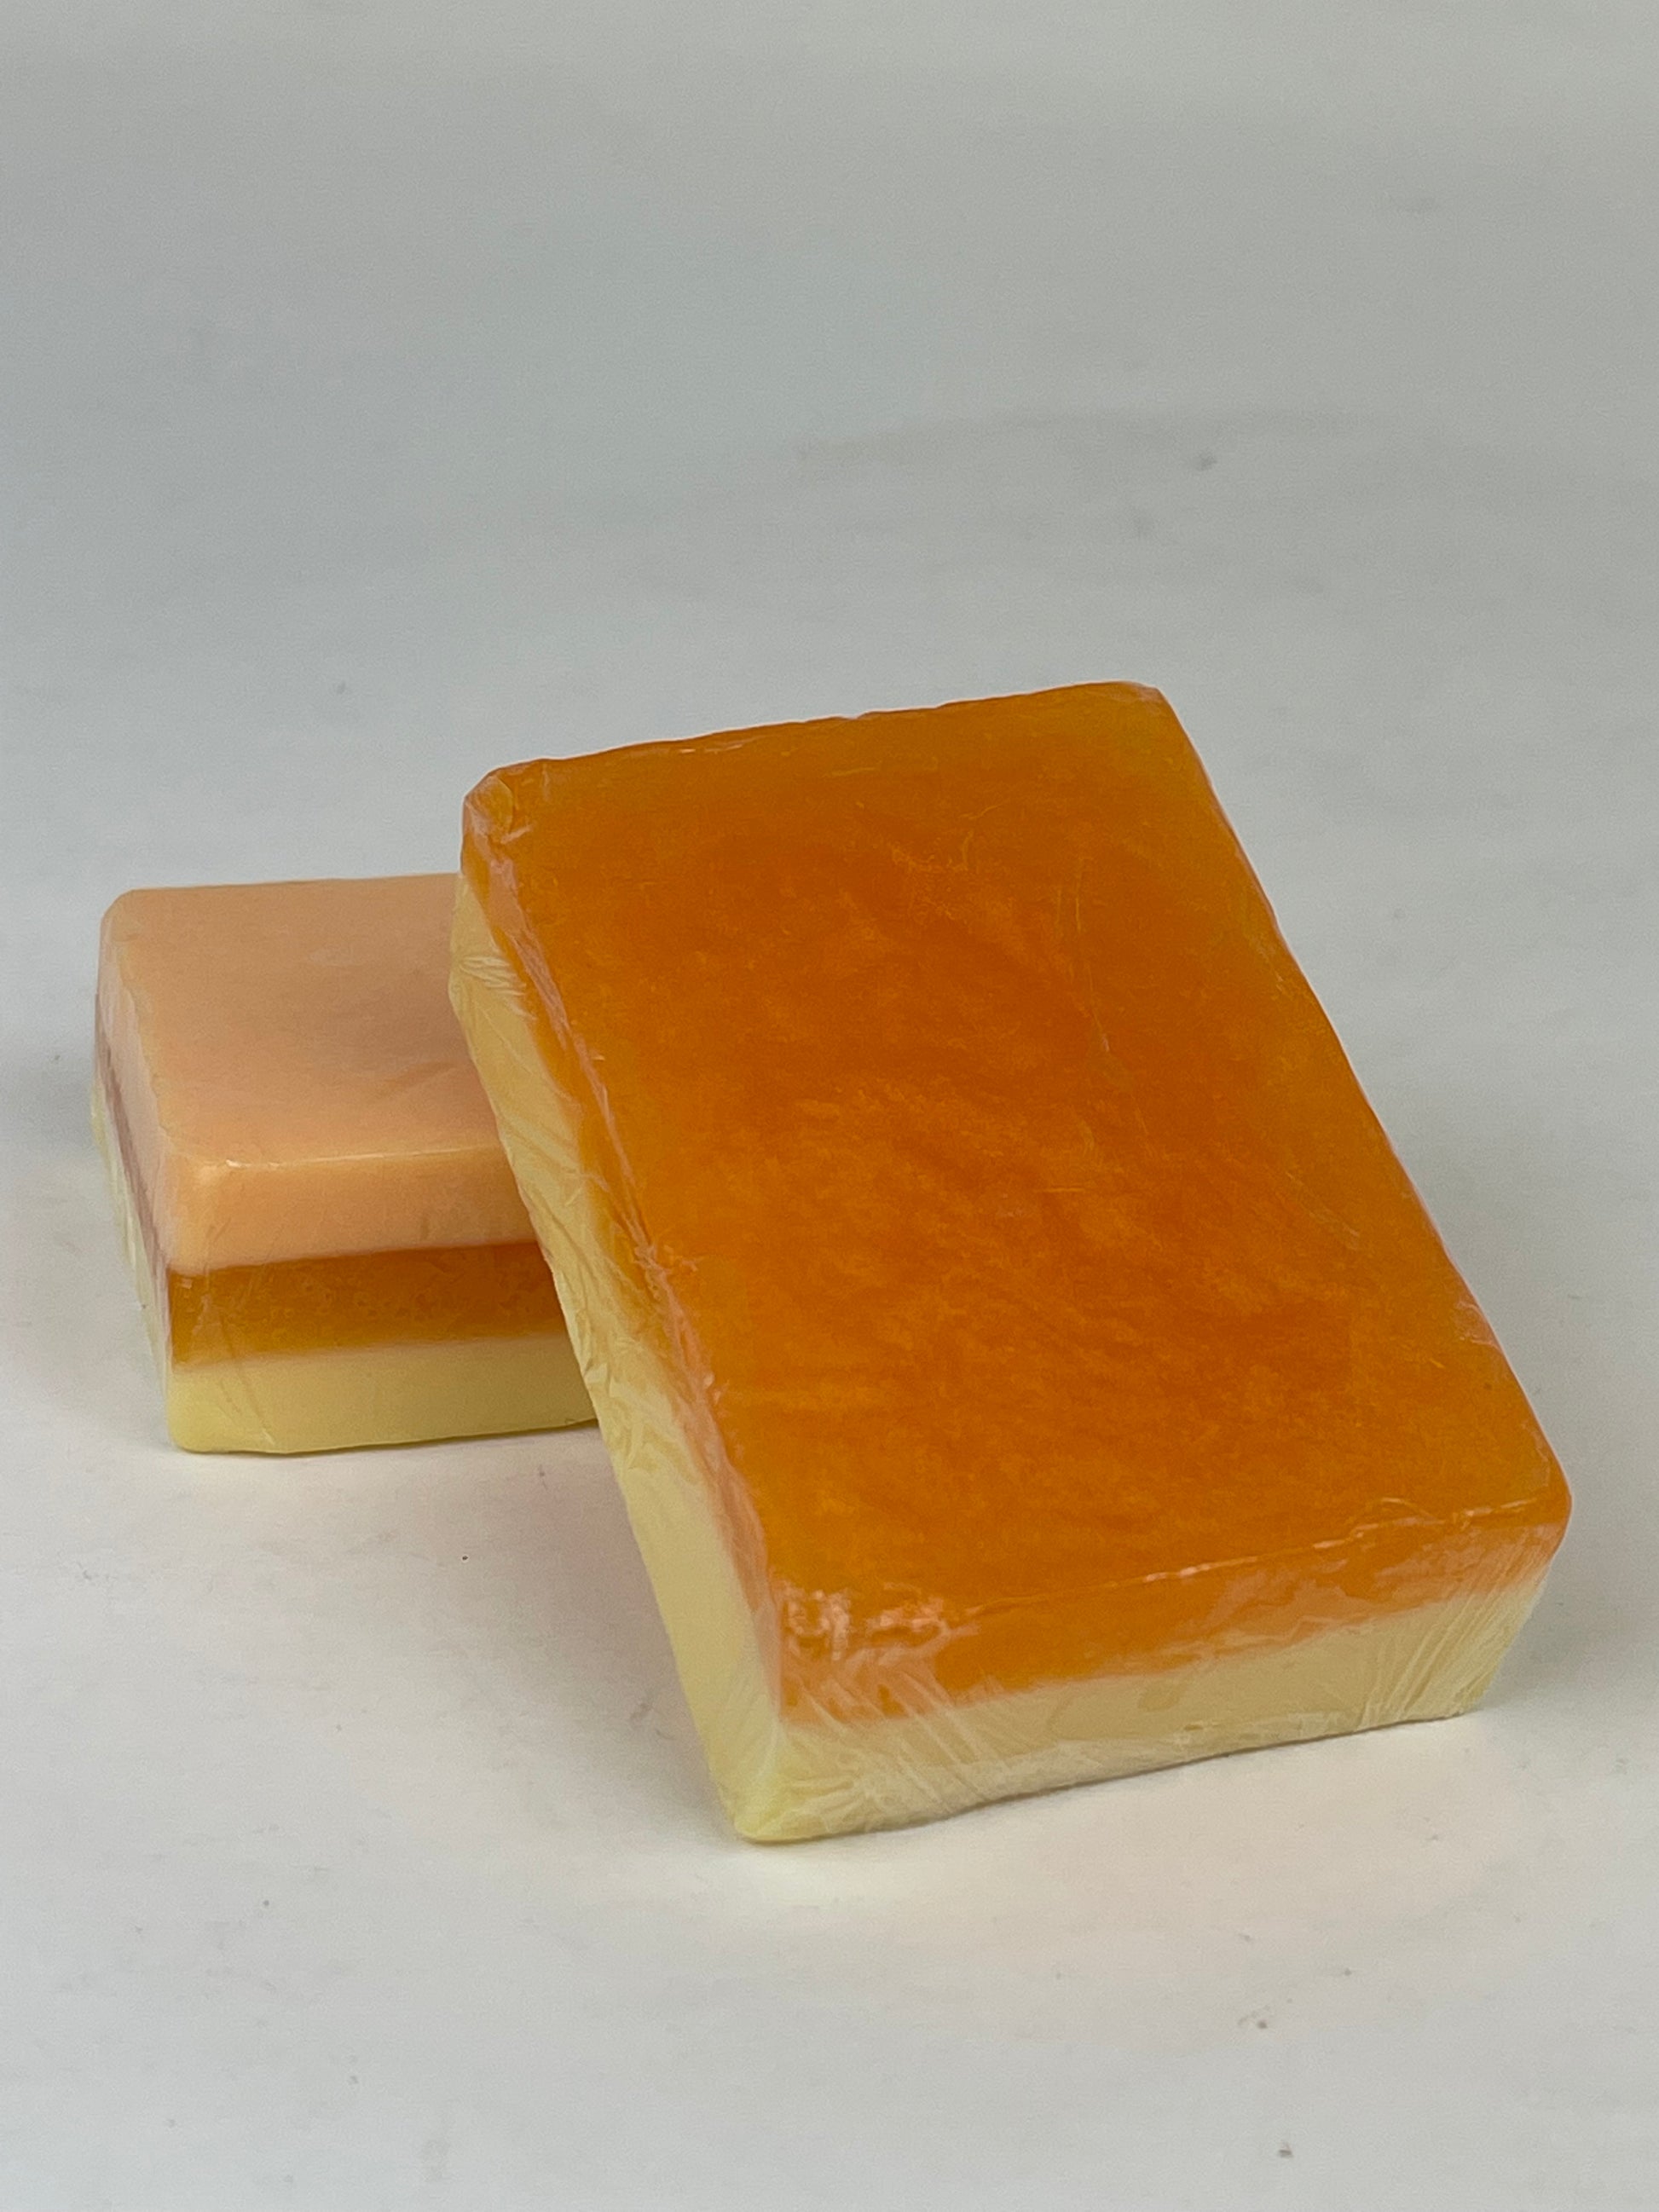 Orange Soap at Rs 15/piece, Handmade Soap in Surat